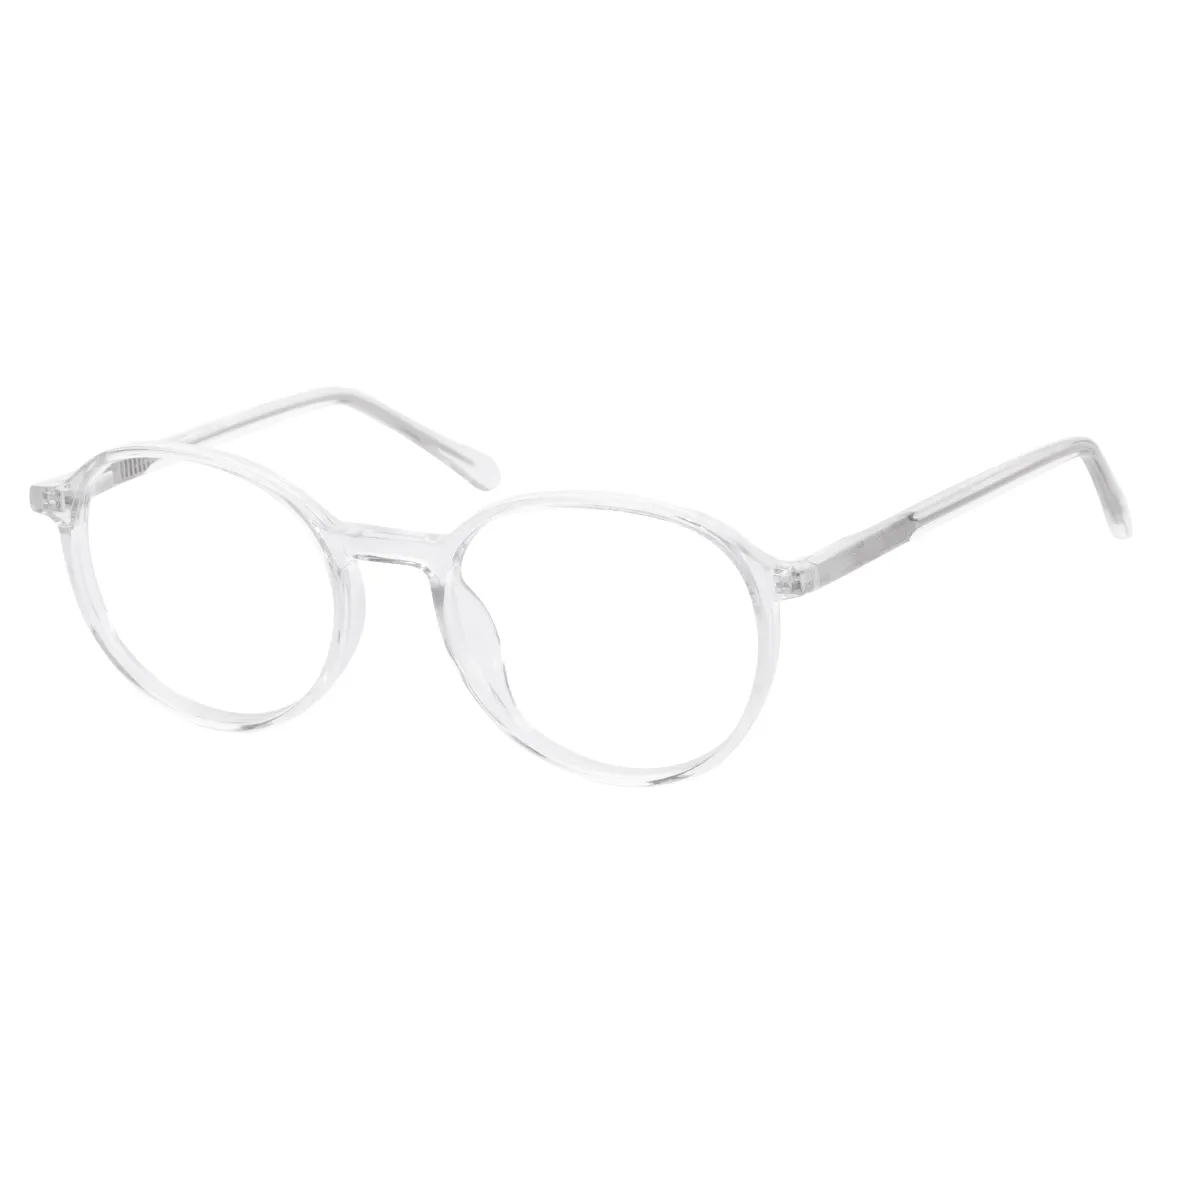 Sophie - Round Translucent Glasses for Women